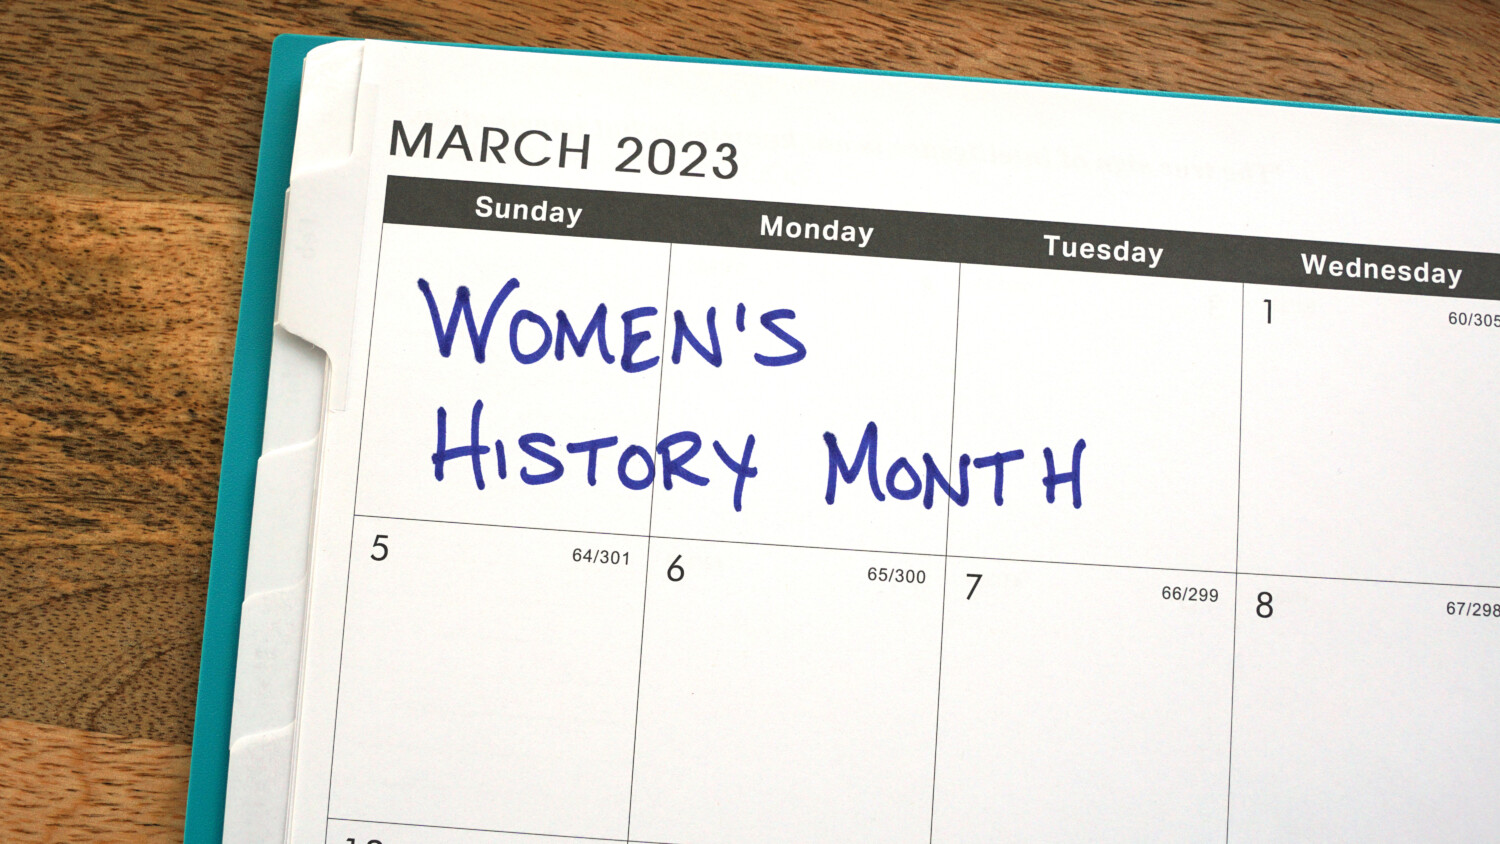 Women's history month written on calendar page